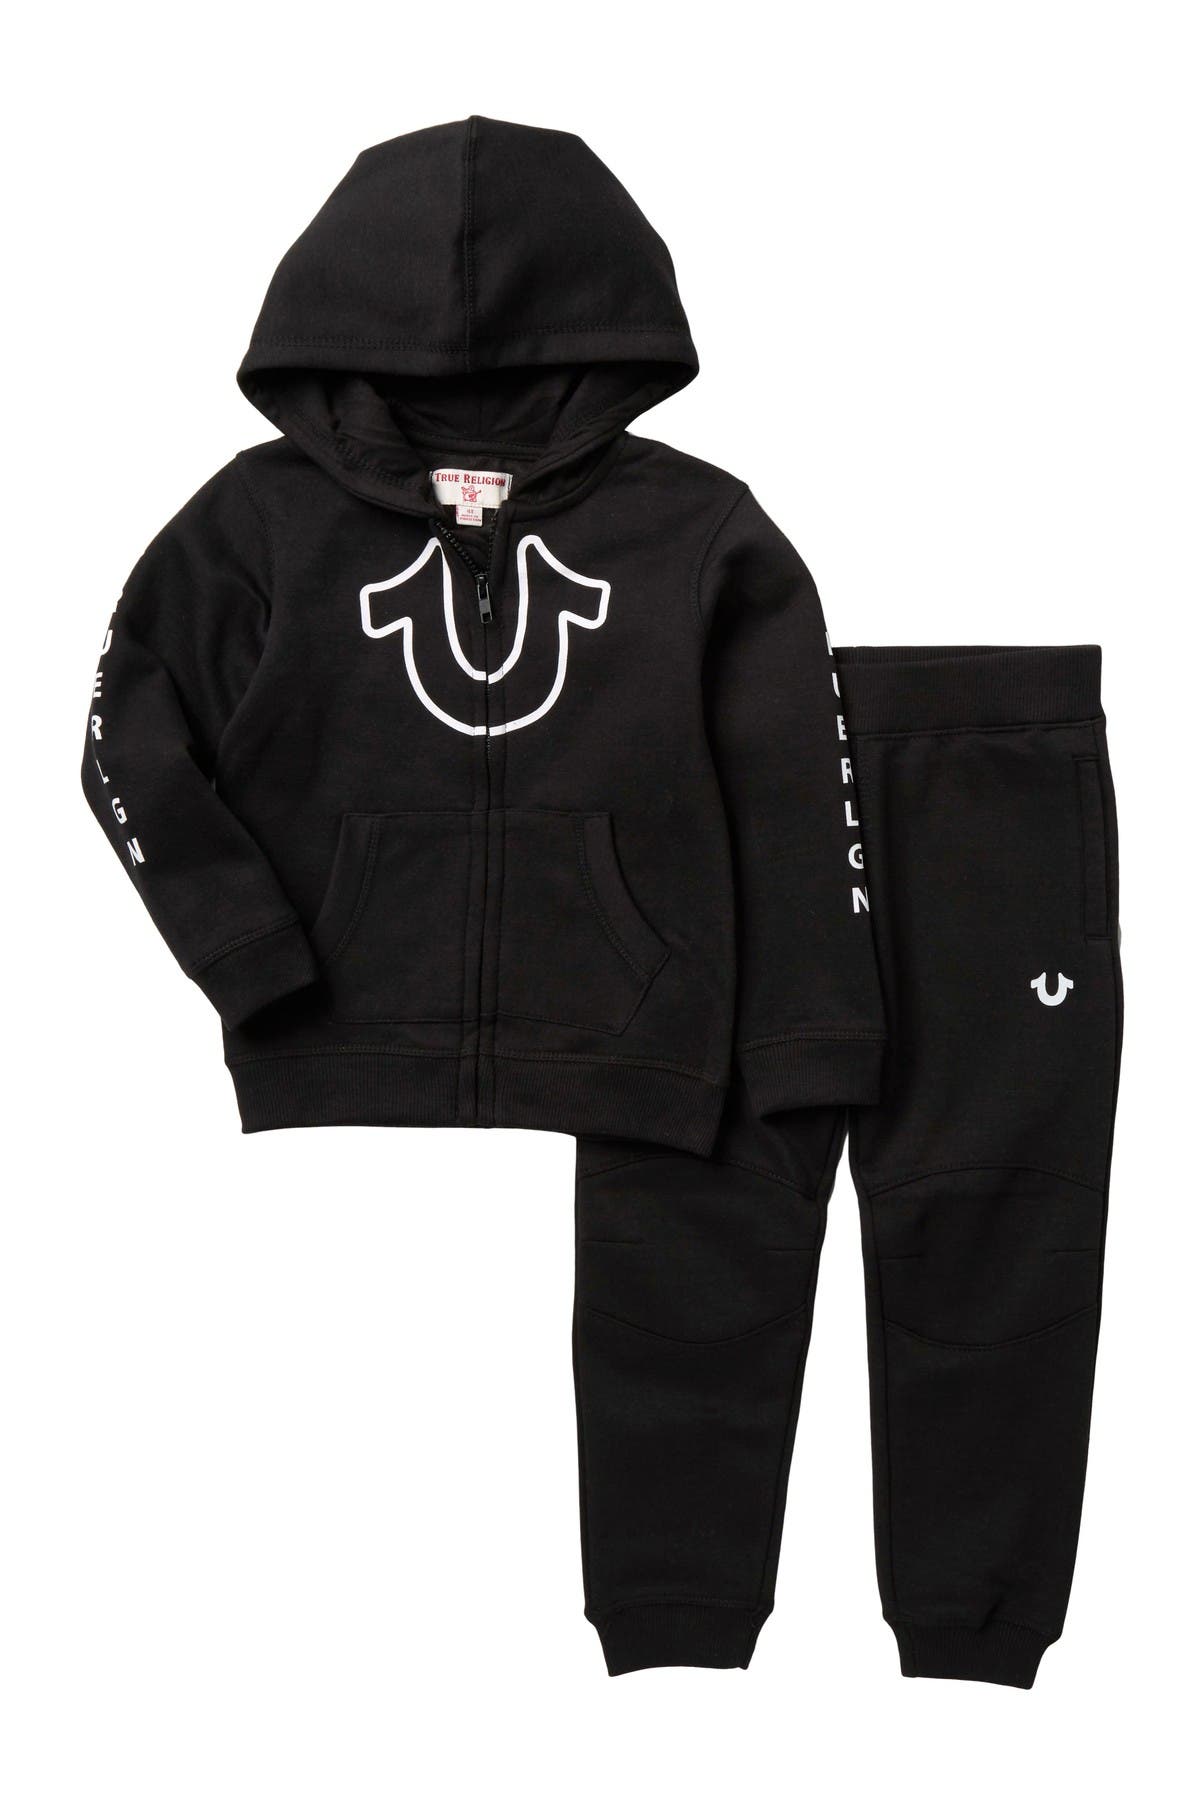 true religion hoodie sweatpants set